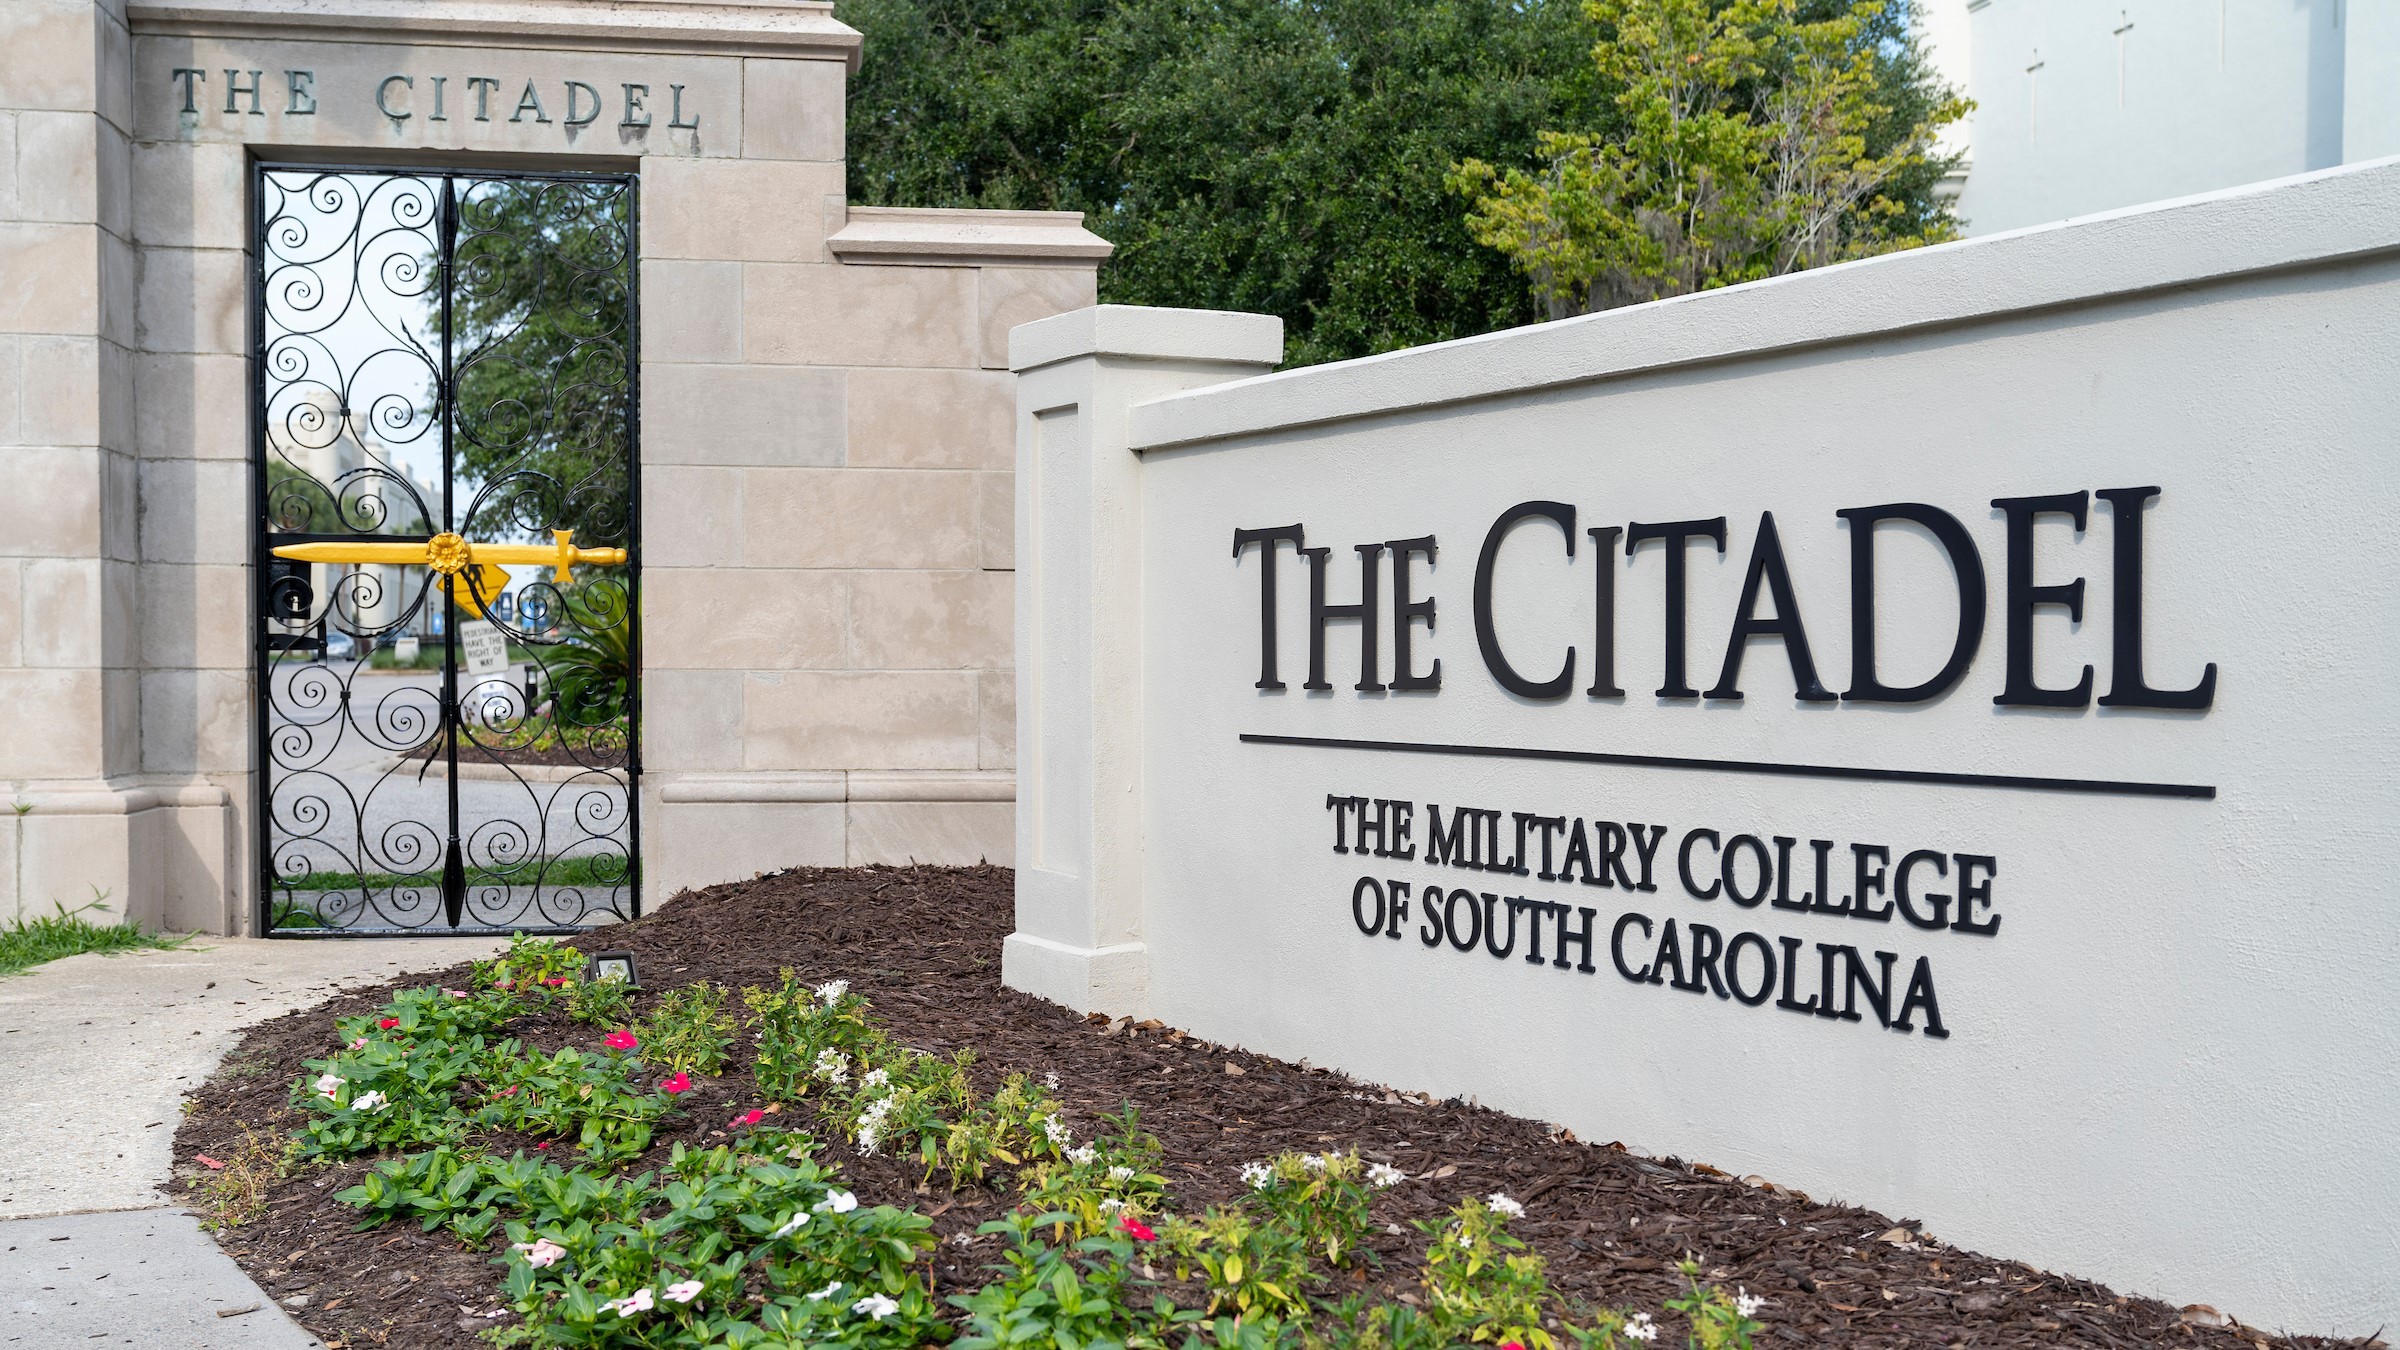 The Citadel  Charleston SC